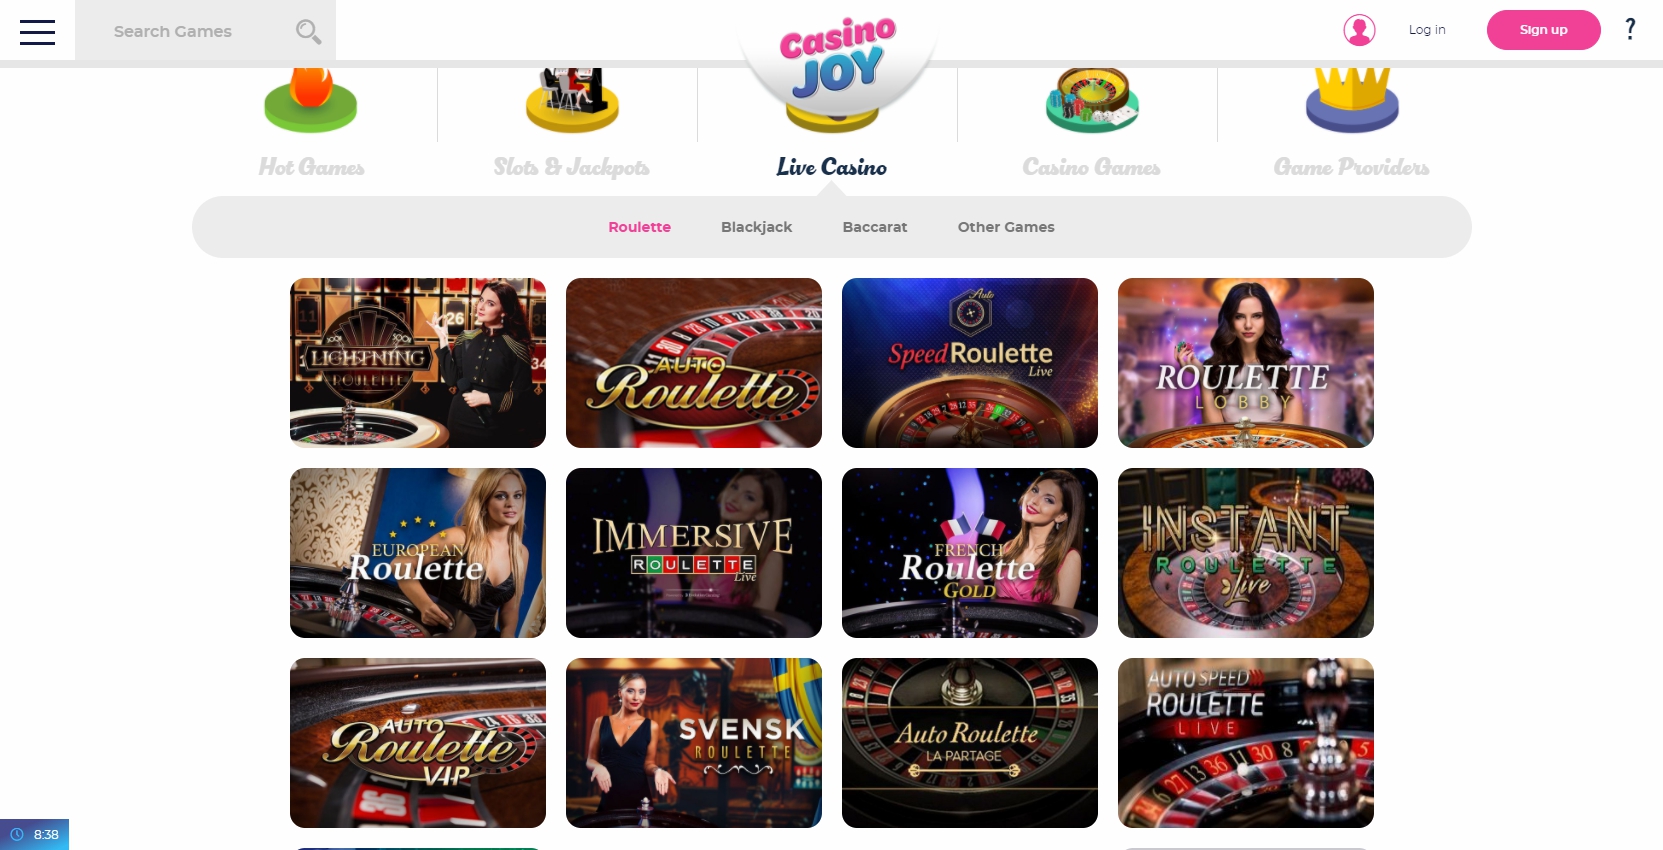 Casino Joy Live Dealer Games